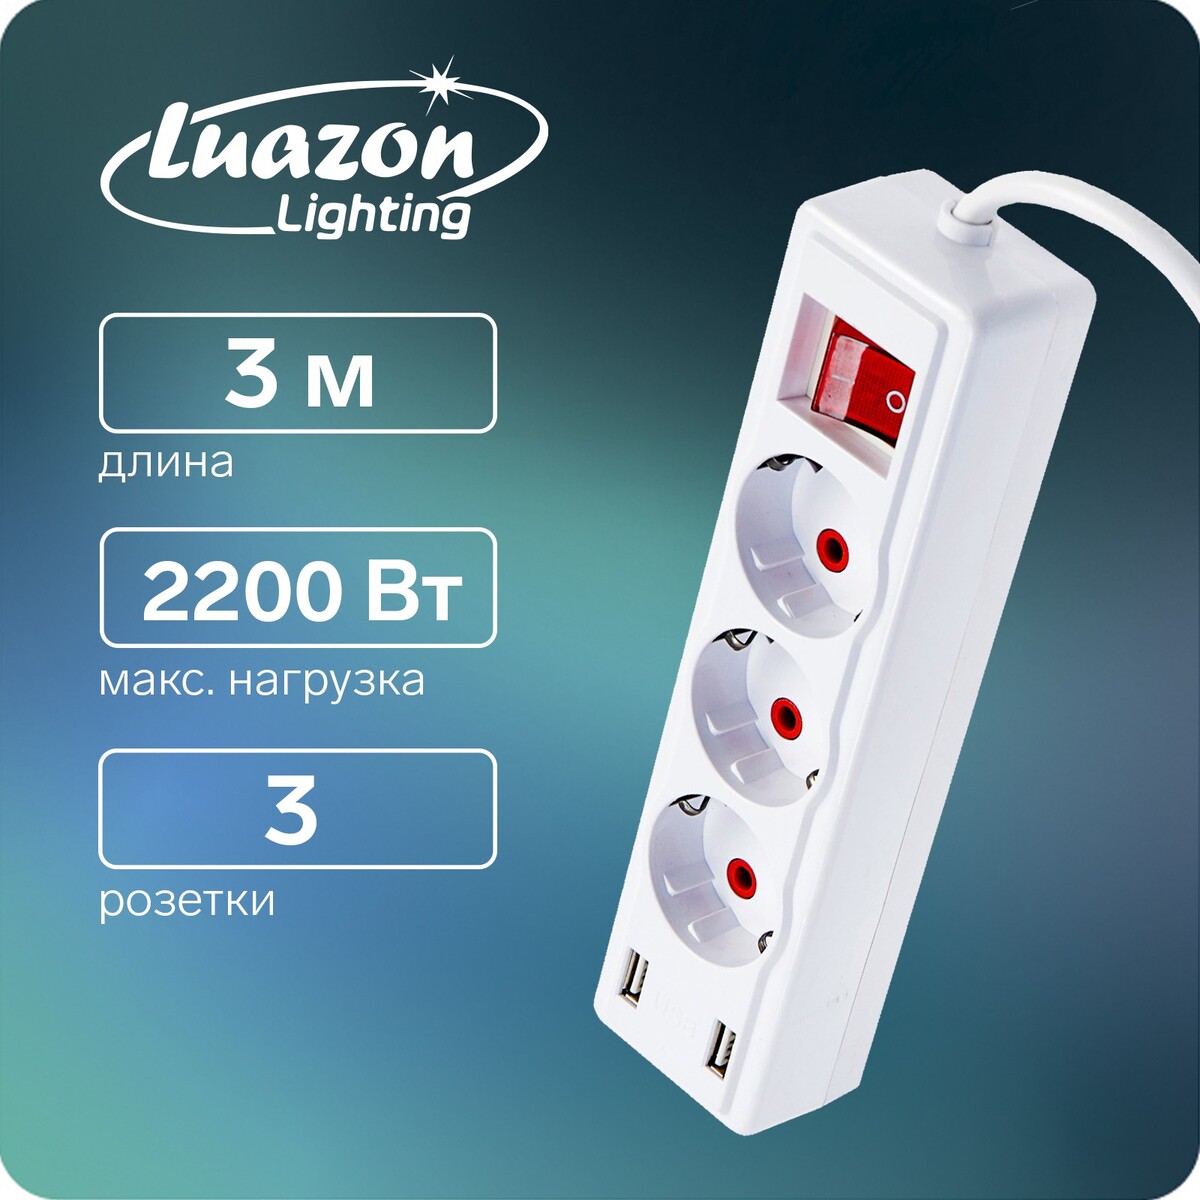  luazon lighting, 3 , 3 , 10 , 2200 , 20.75 2, 2usb,  ., 